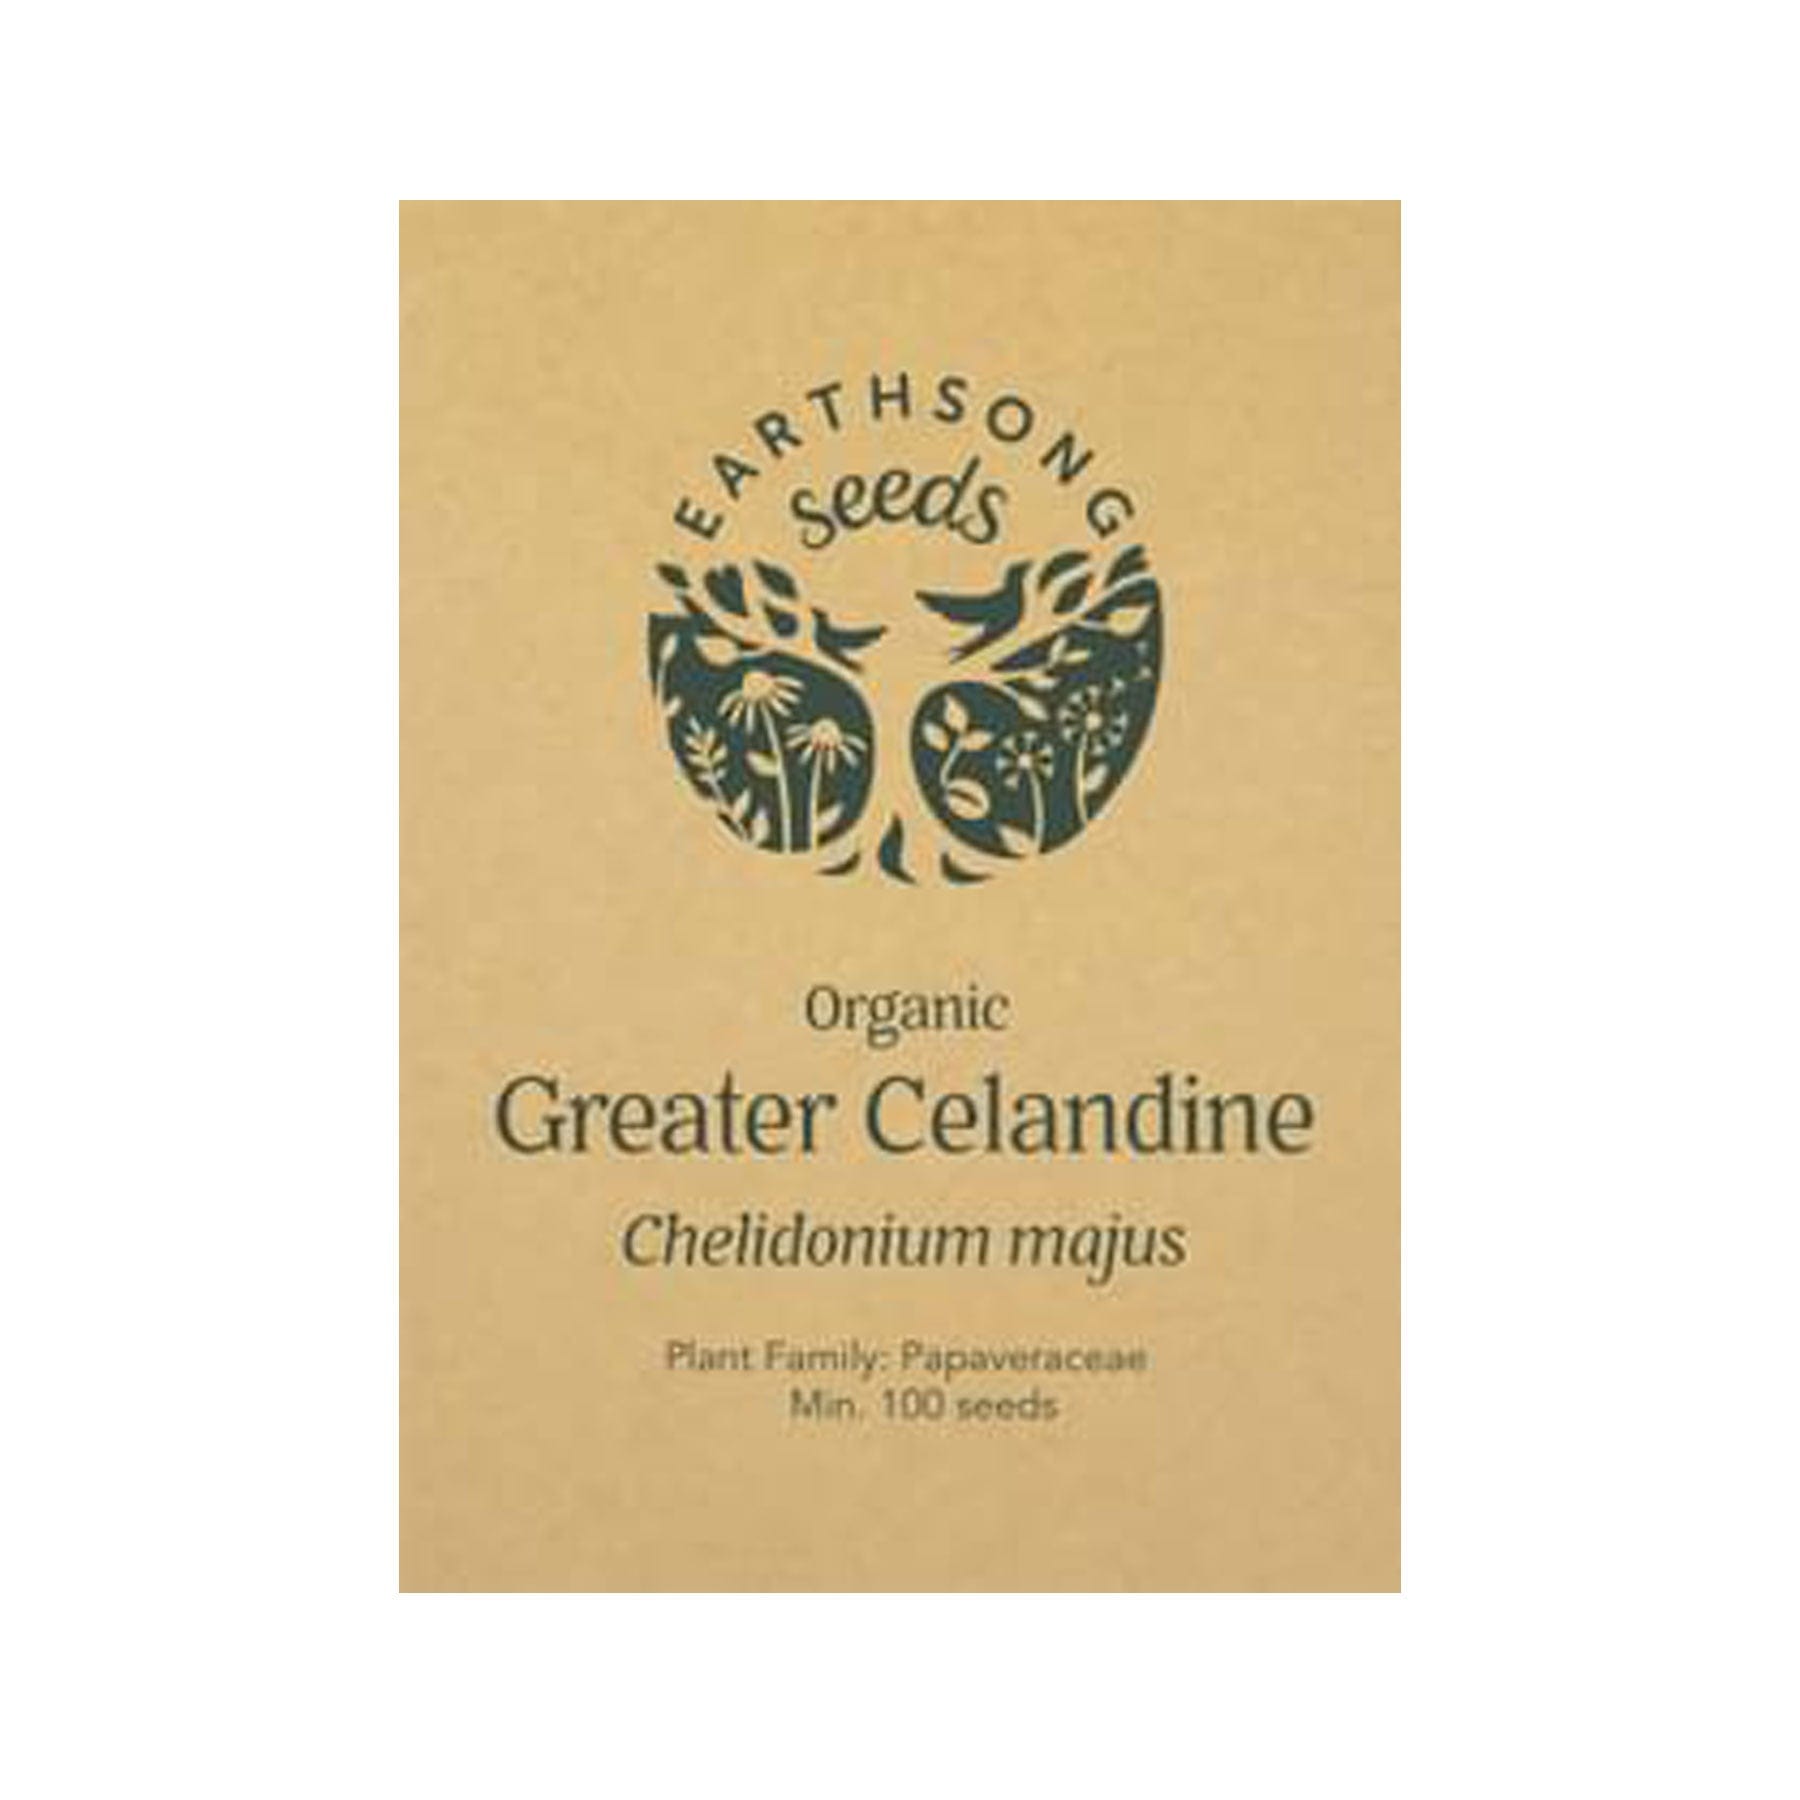 Celandine greater seed pack